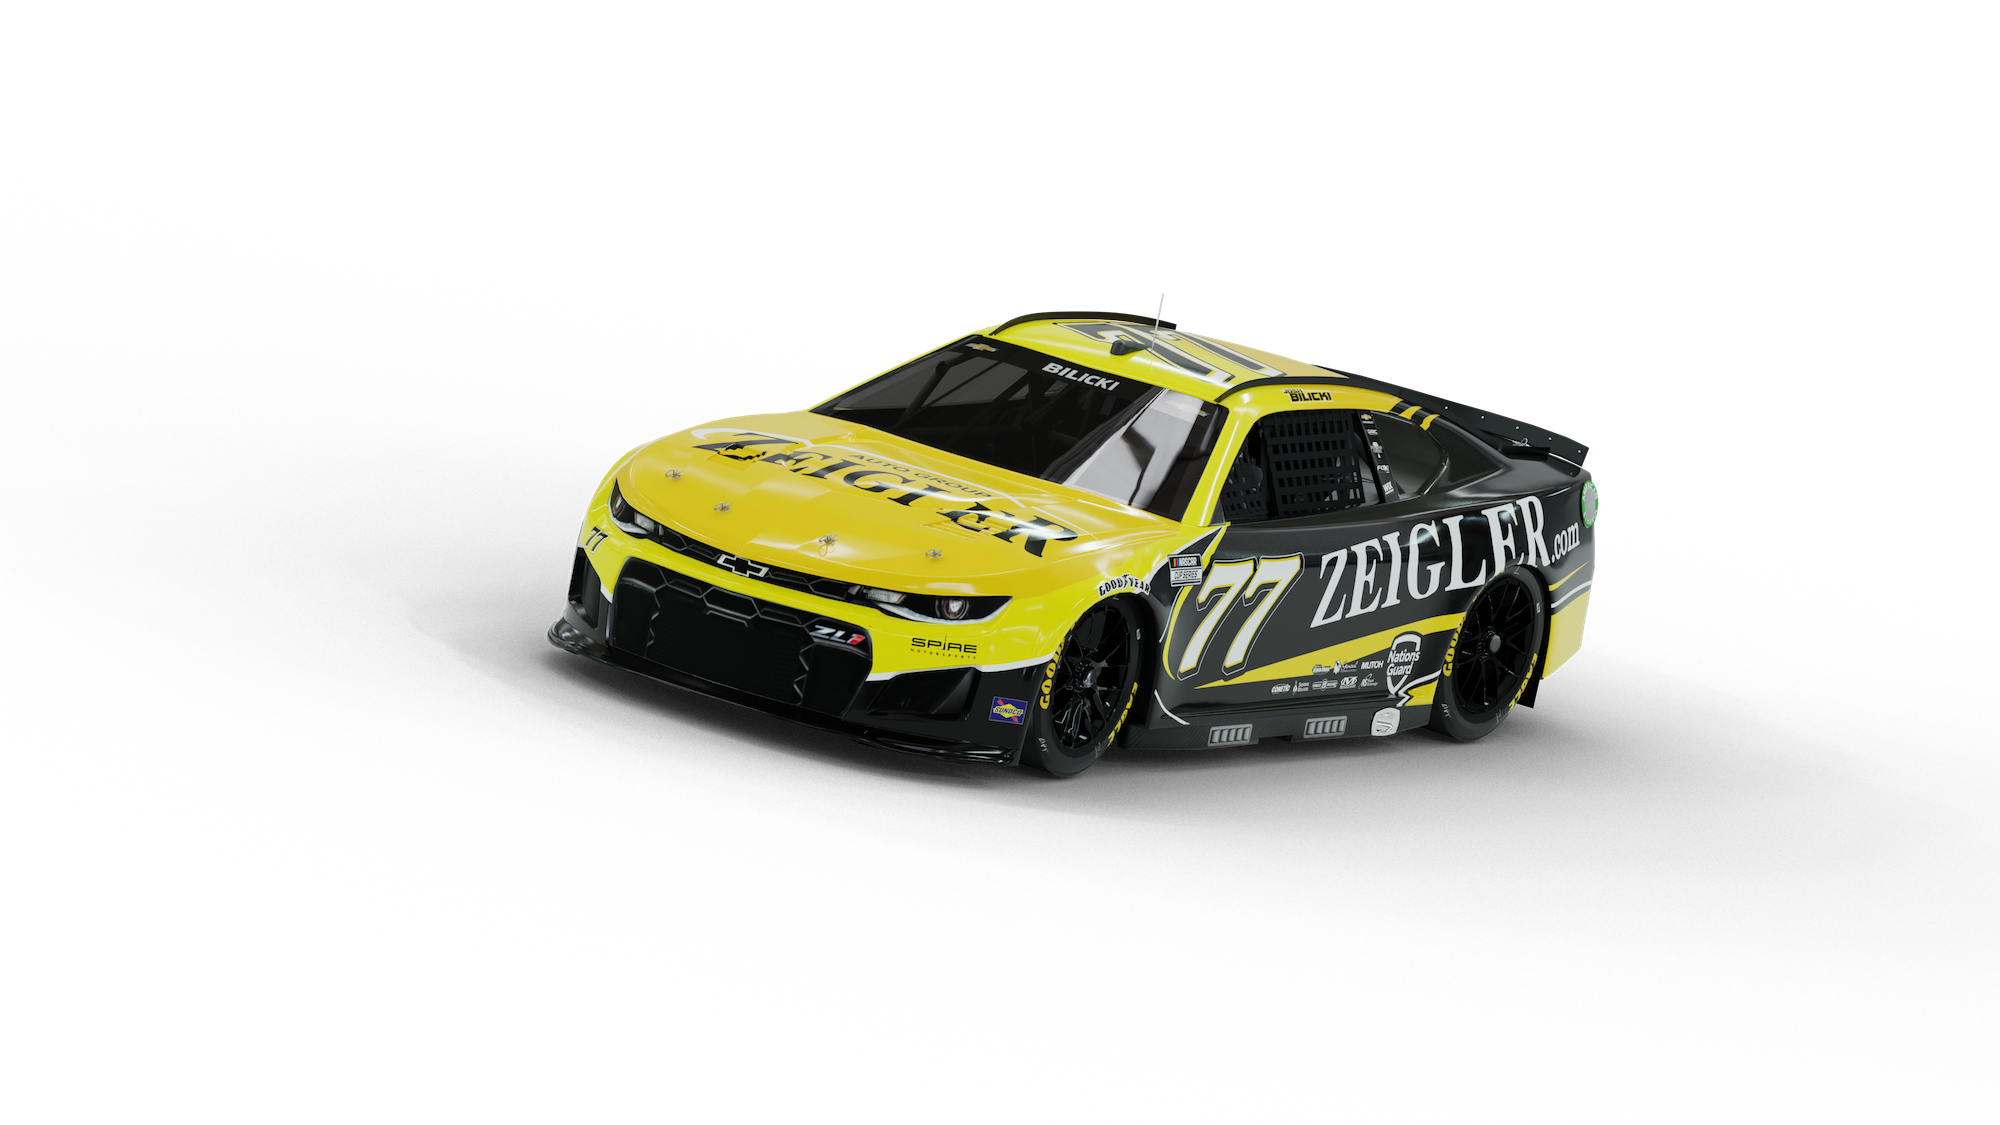 Josh Bilicki’s Zeigler-sponsored No. 77 for Spire Motorsports #TEAMZEIGLER